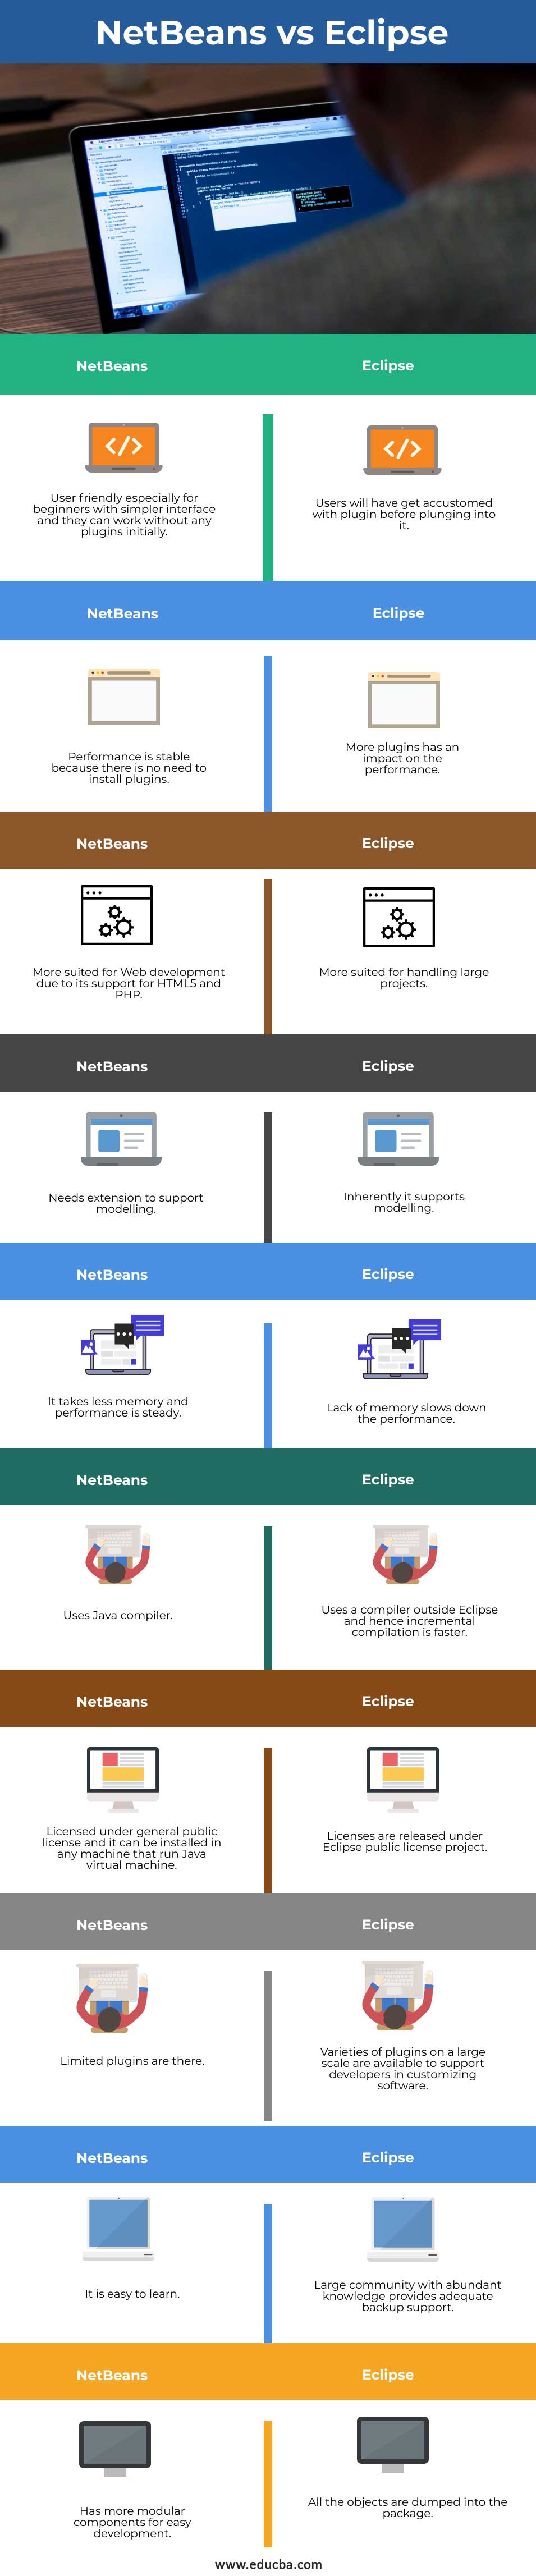 NetBeans-vs-Eclipse-info